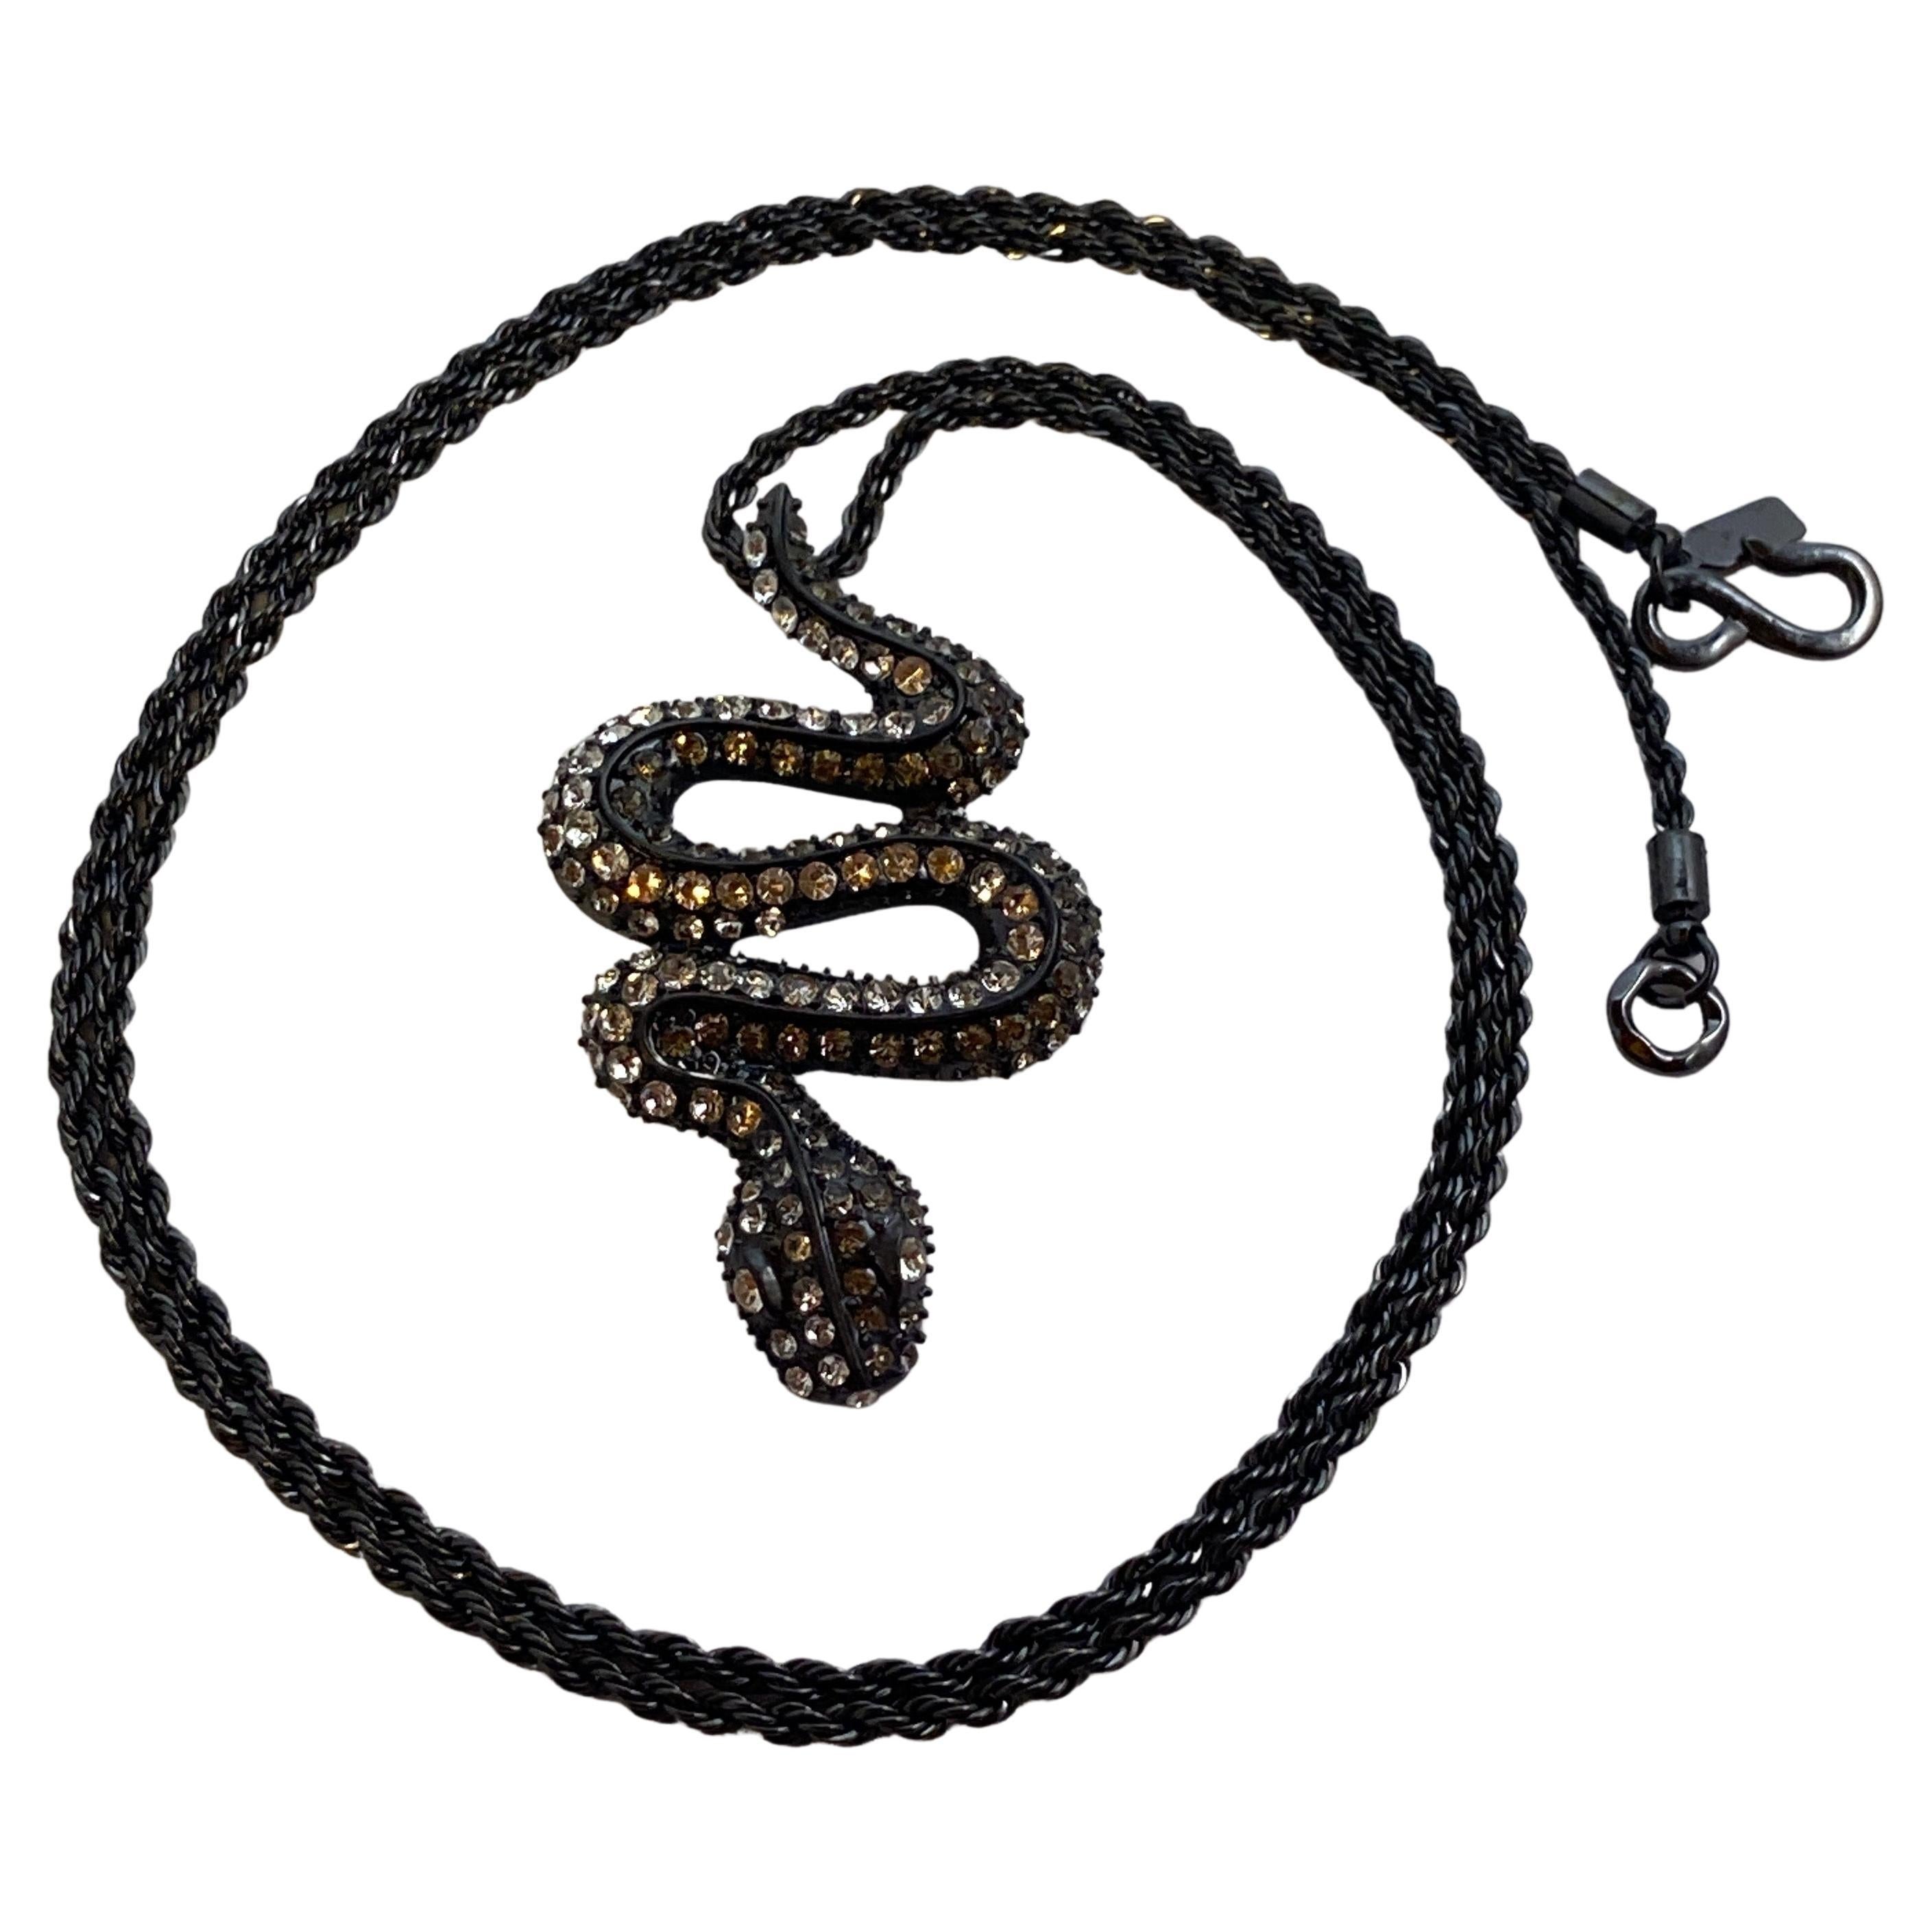 Kenneth Jay Lane - Ensemble pendentif et collier « serpent » en strass noir de taille moyenne